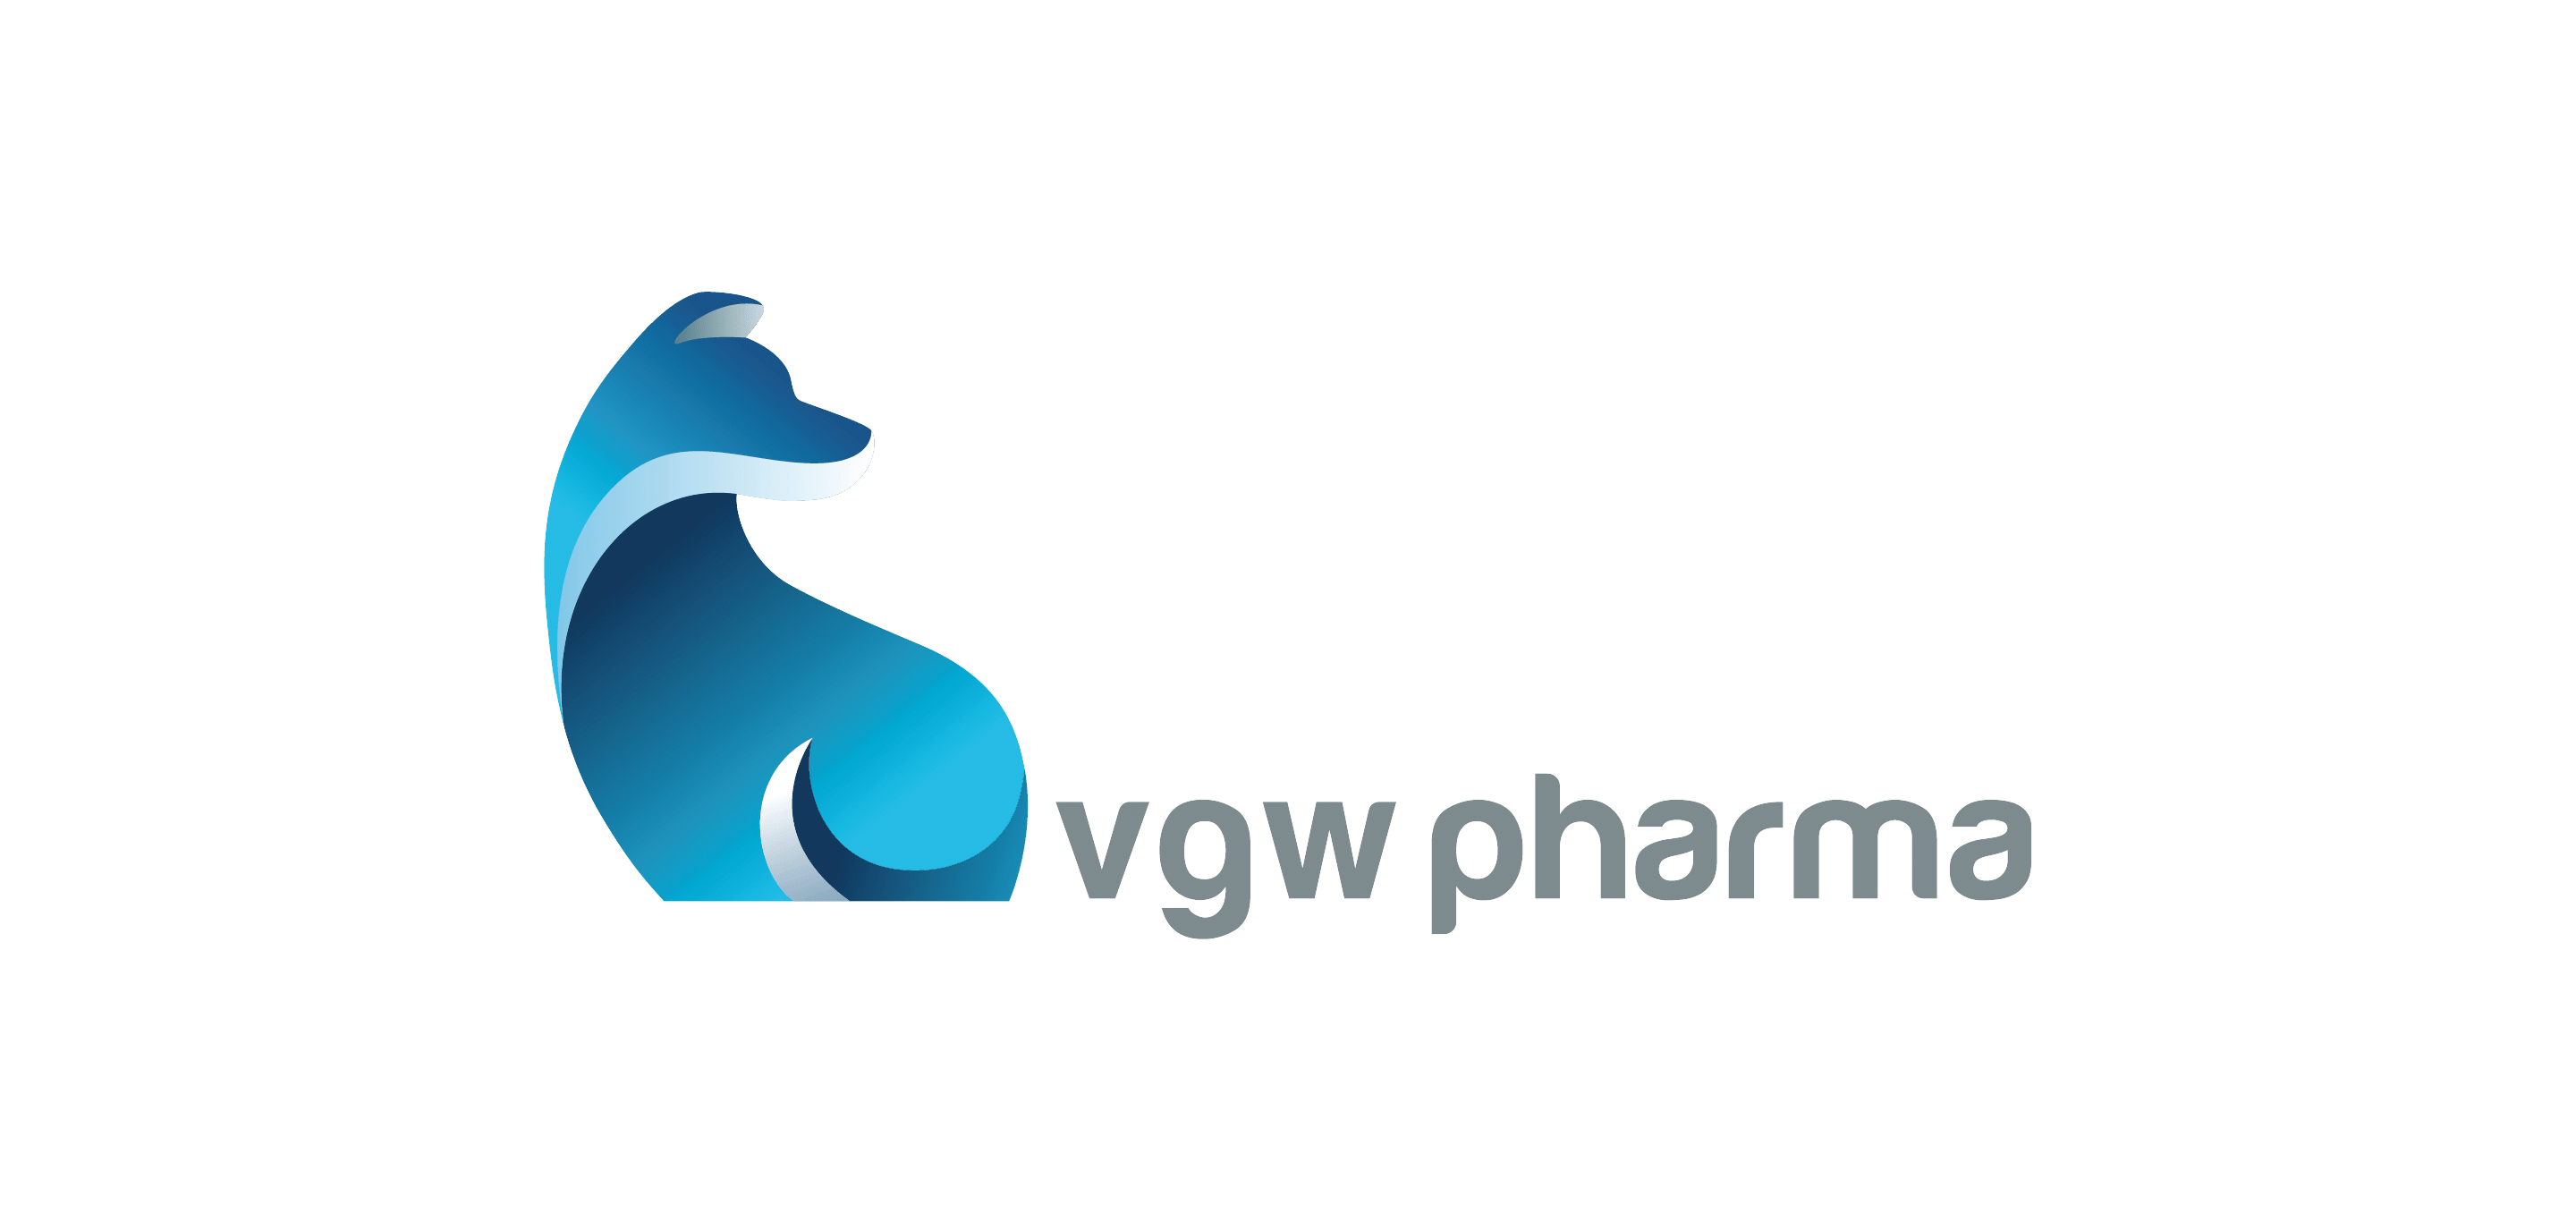 VGW pharma OPUS marketing positionering propositie B2B